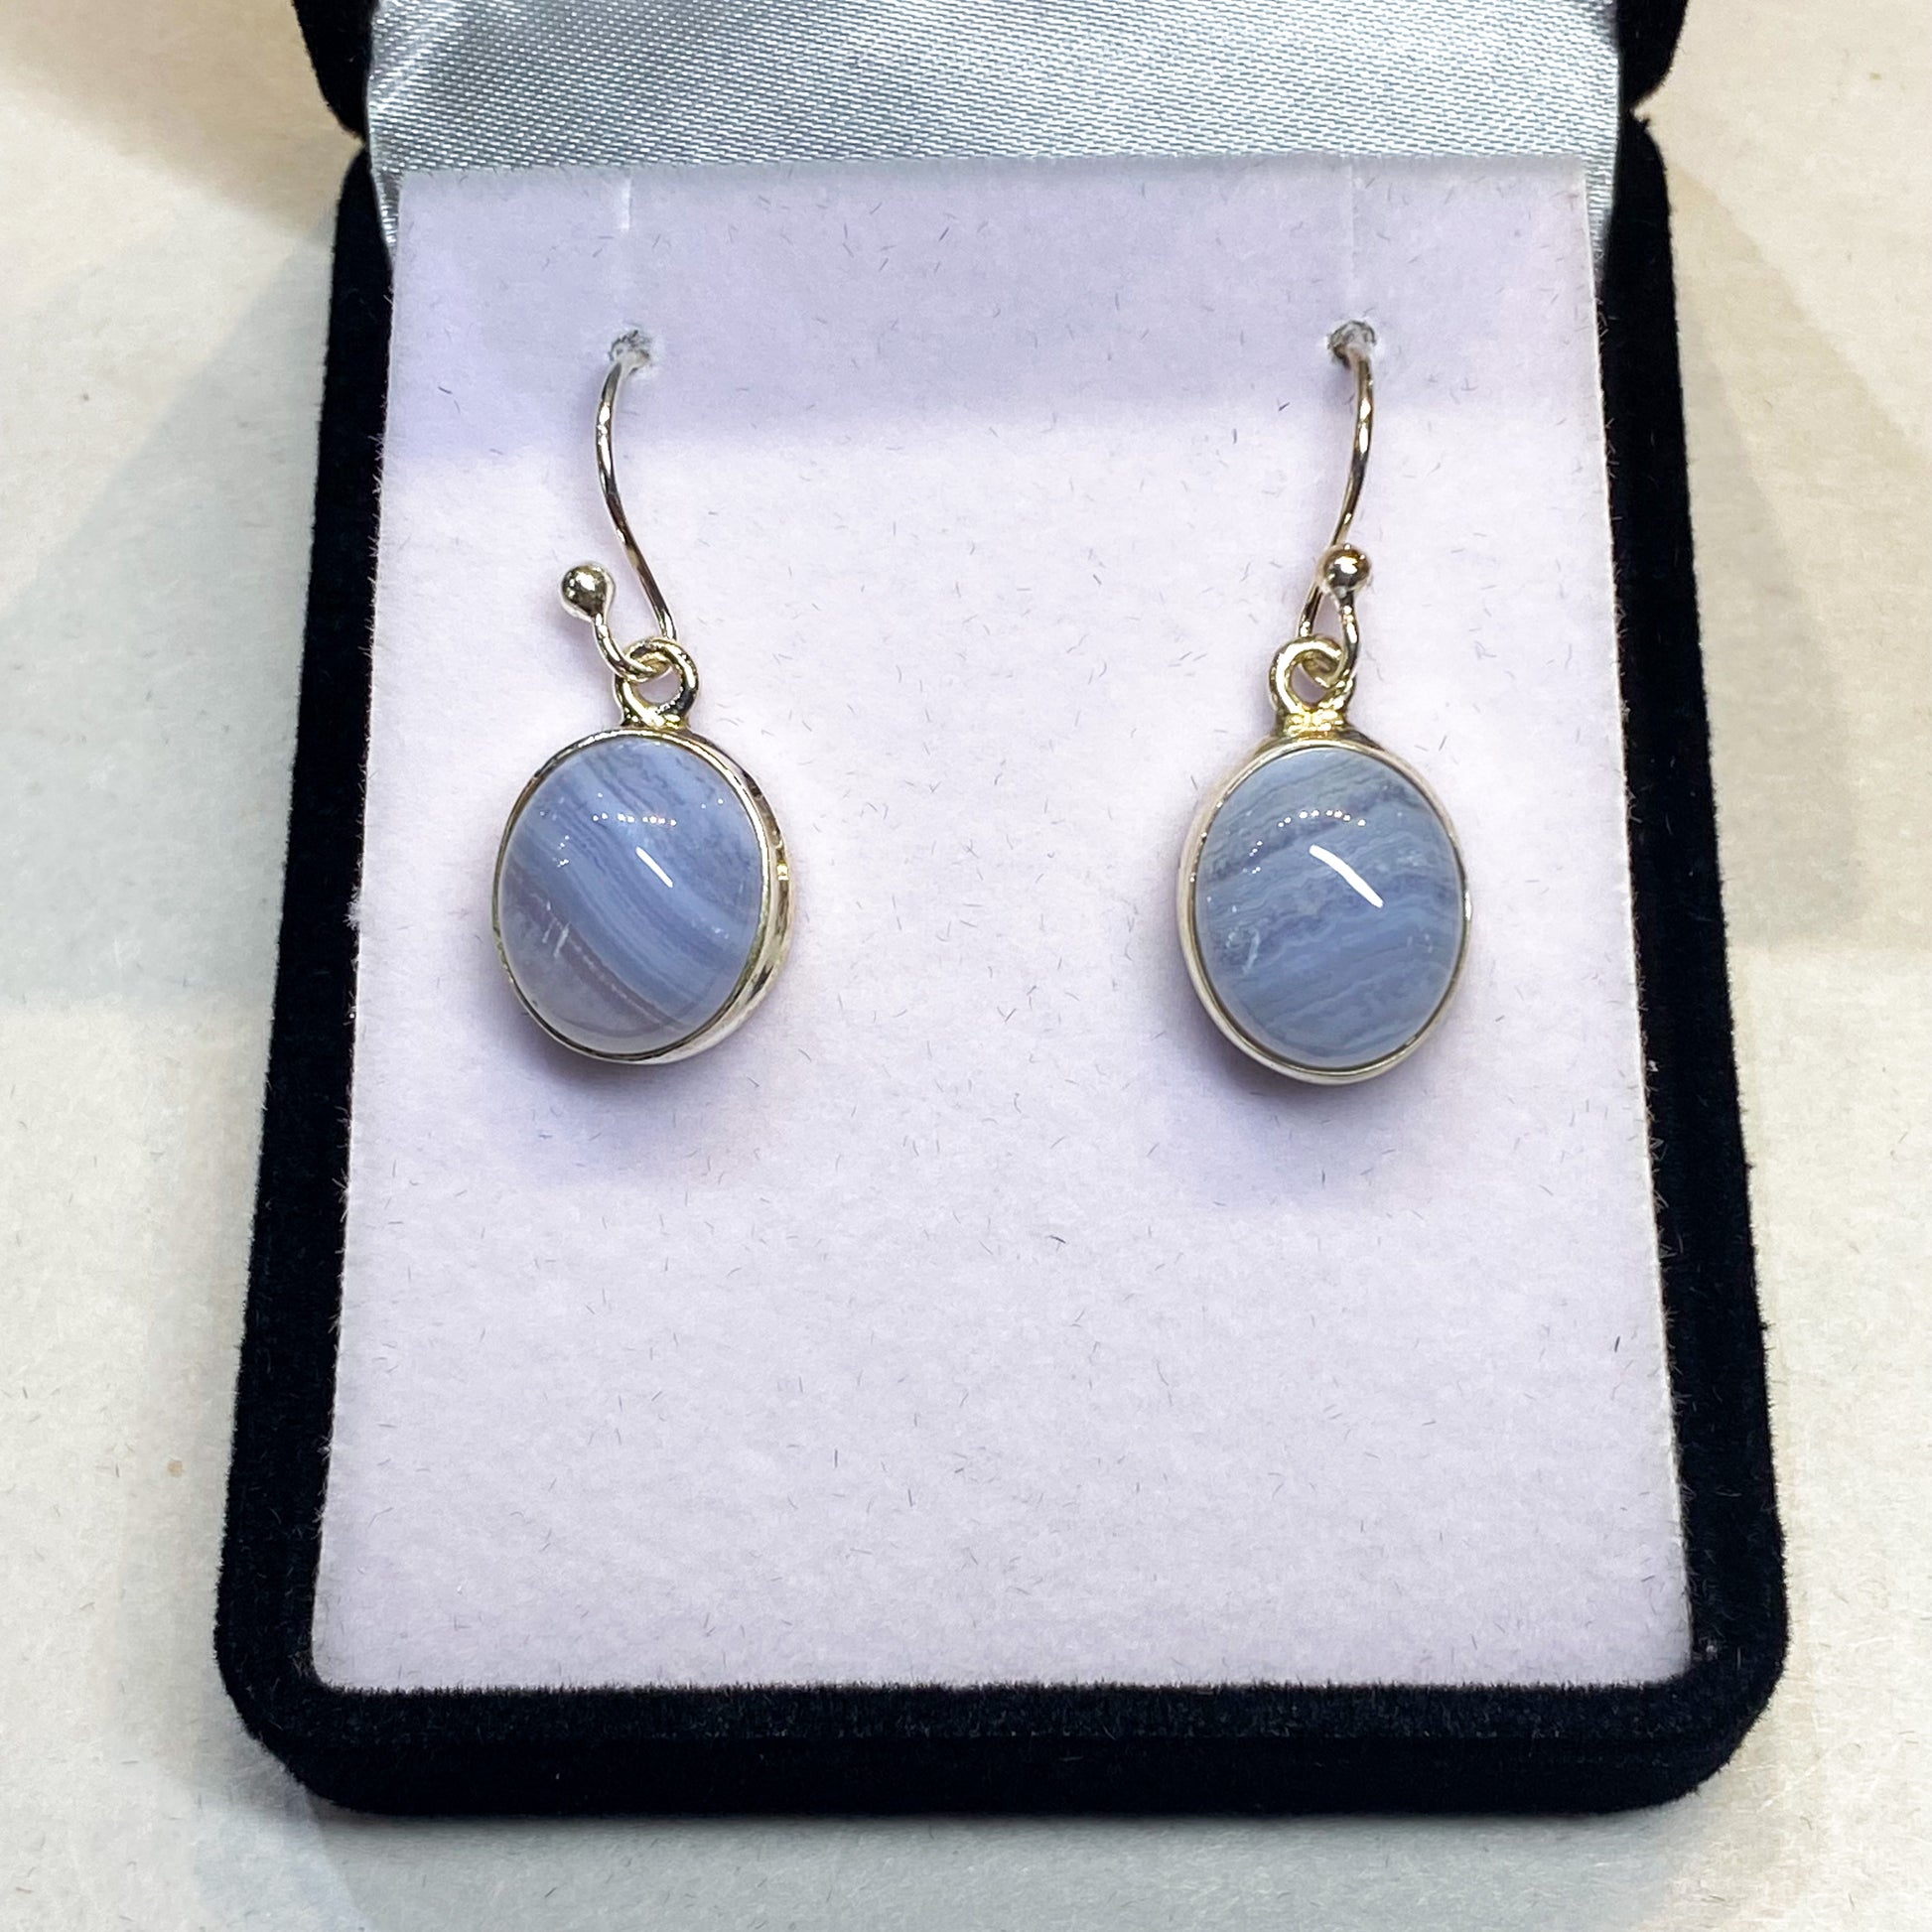 Blue Lace Agate Oval Earrings - Rivendell Shop